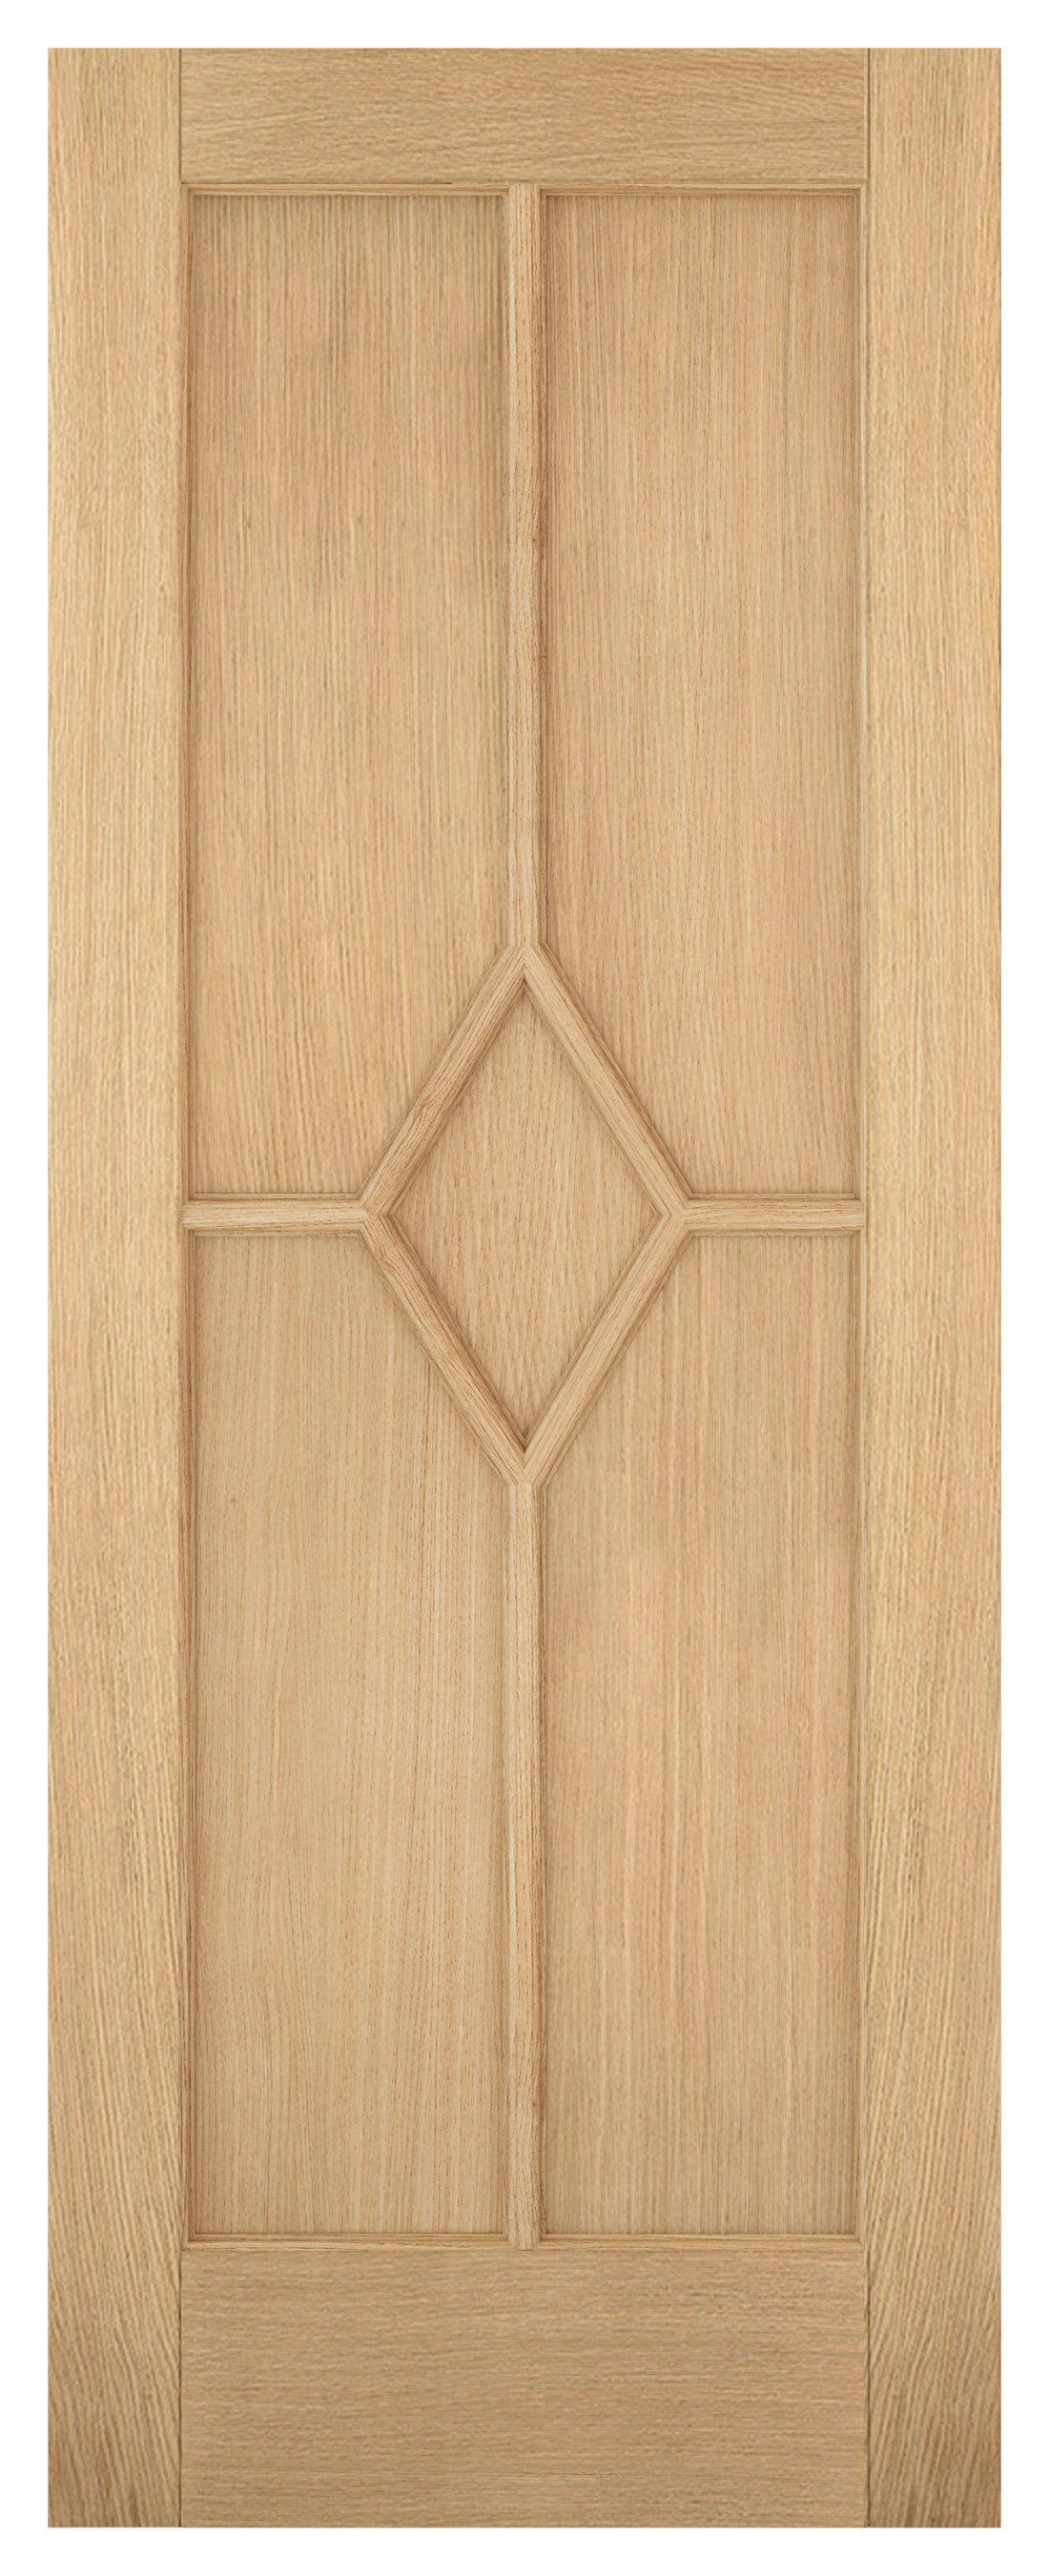 Image of LPD Internal Reims 5 Panel Pre-finished Oak FD30 Fire Door - 762 x 1981mm